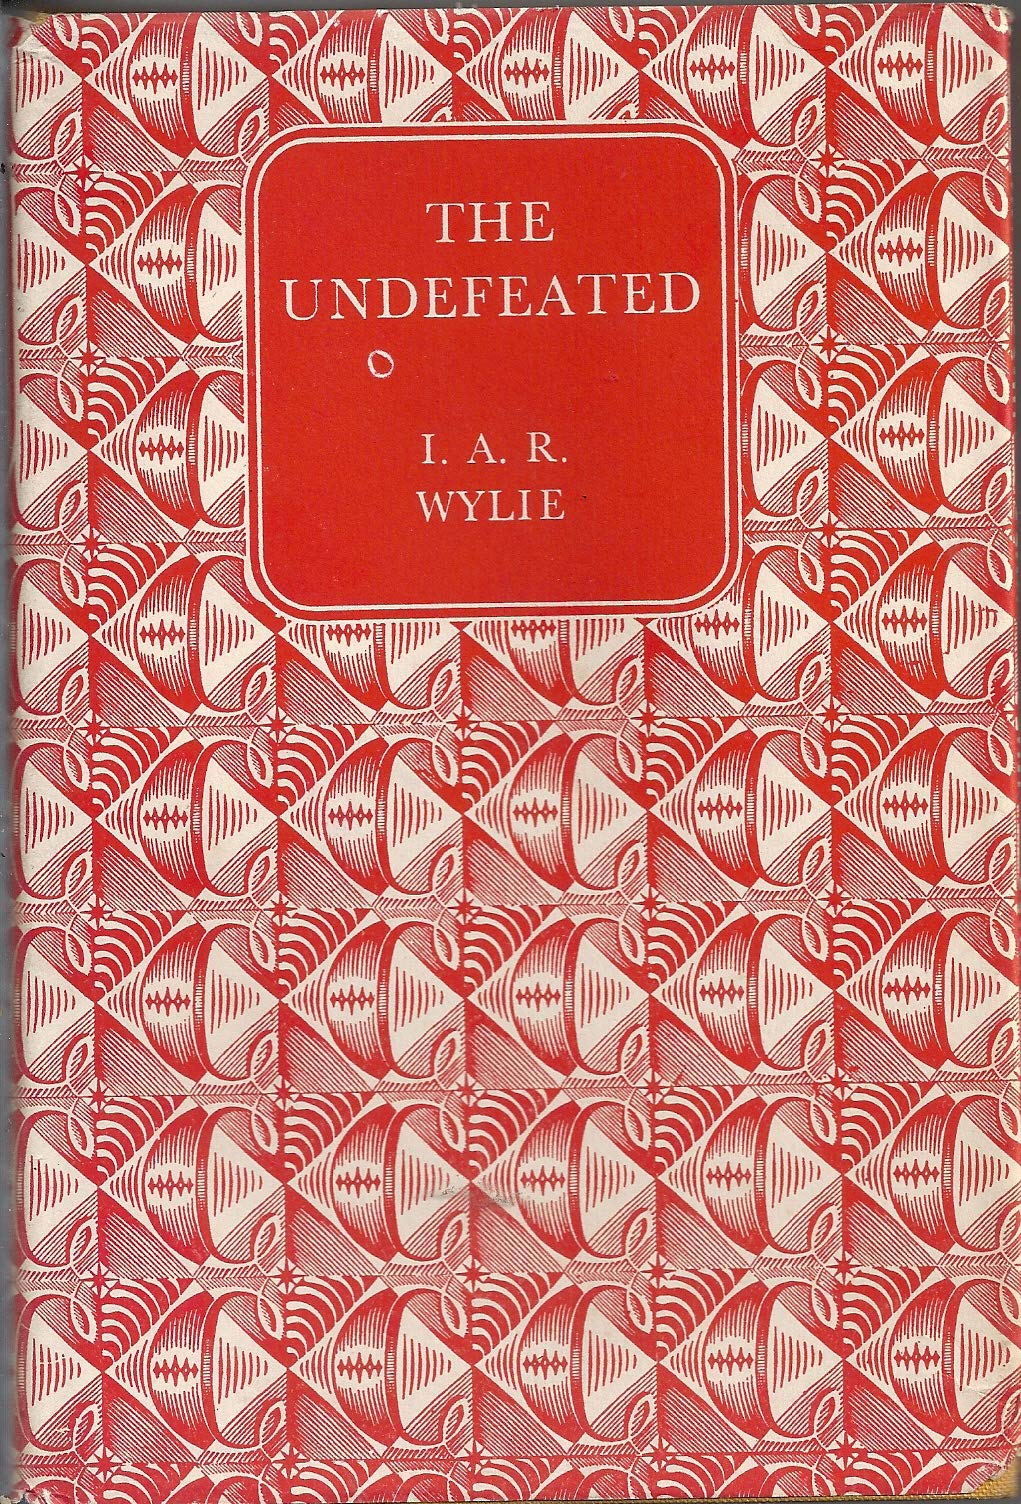 The Undefeated by IAR Wylie [Hardcover] IAR Wylie